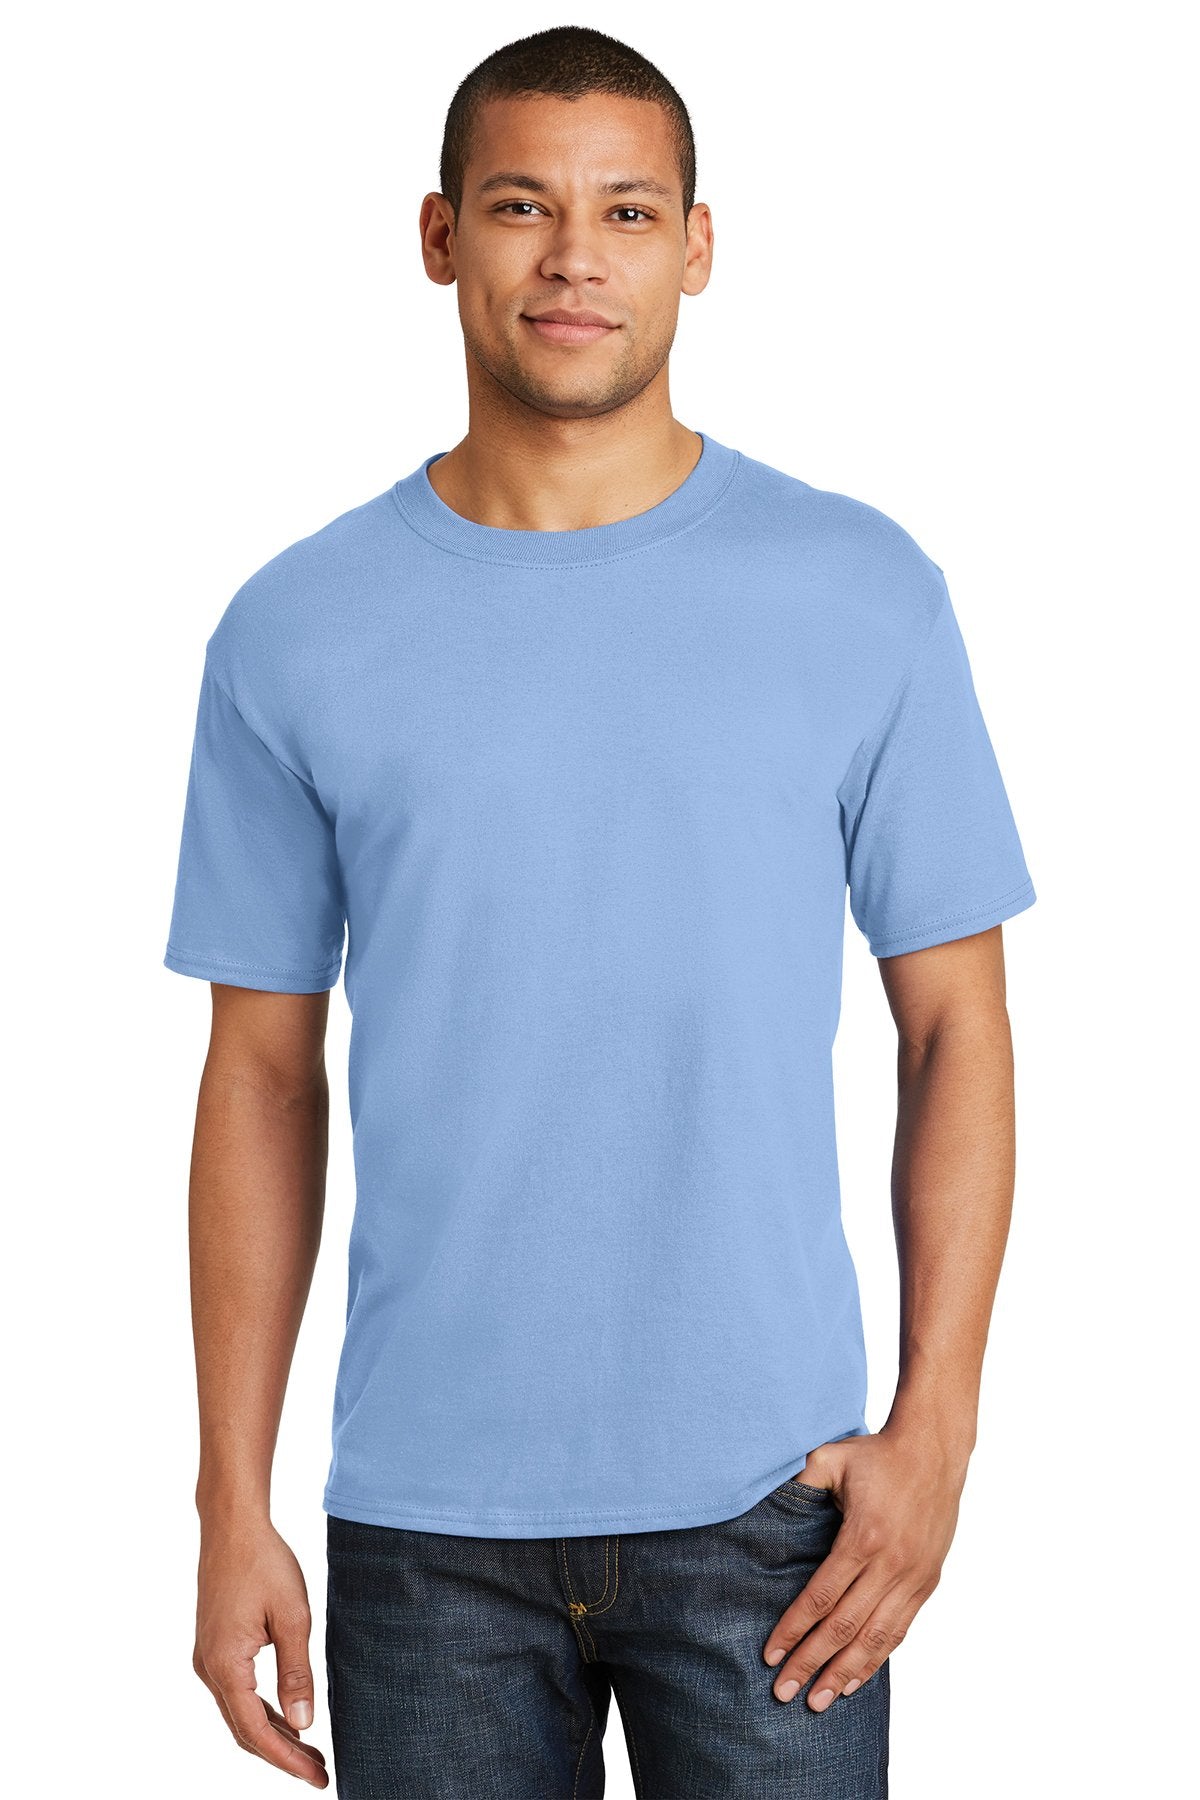 hanes beefy cotton t shirt 5180 light blue